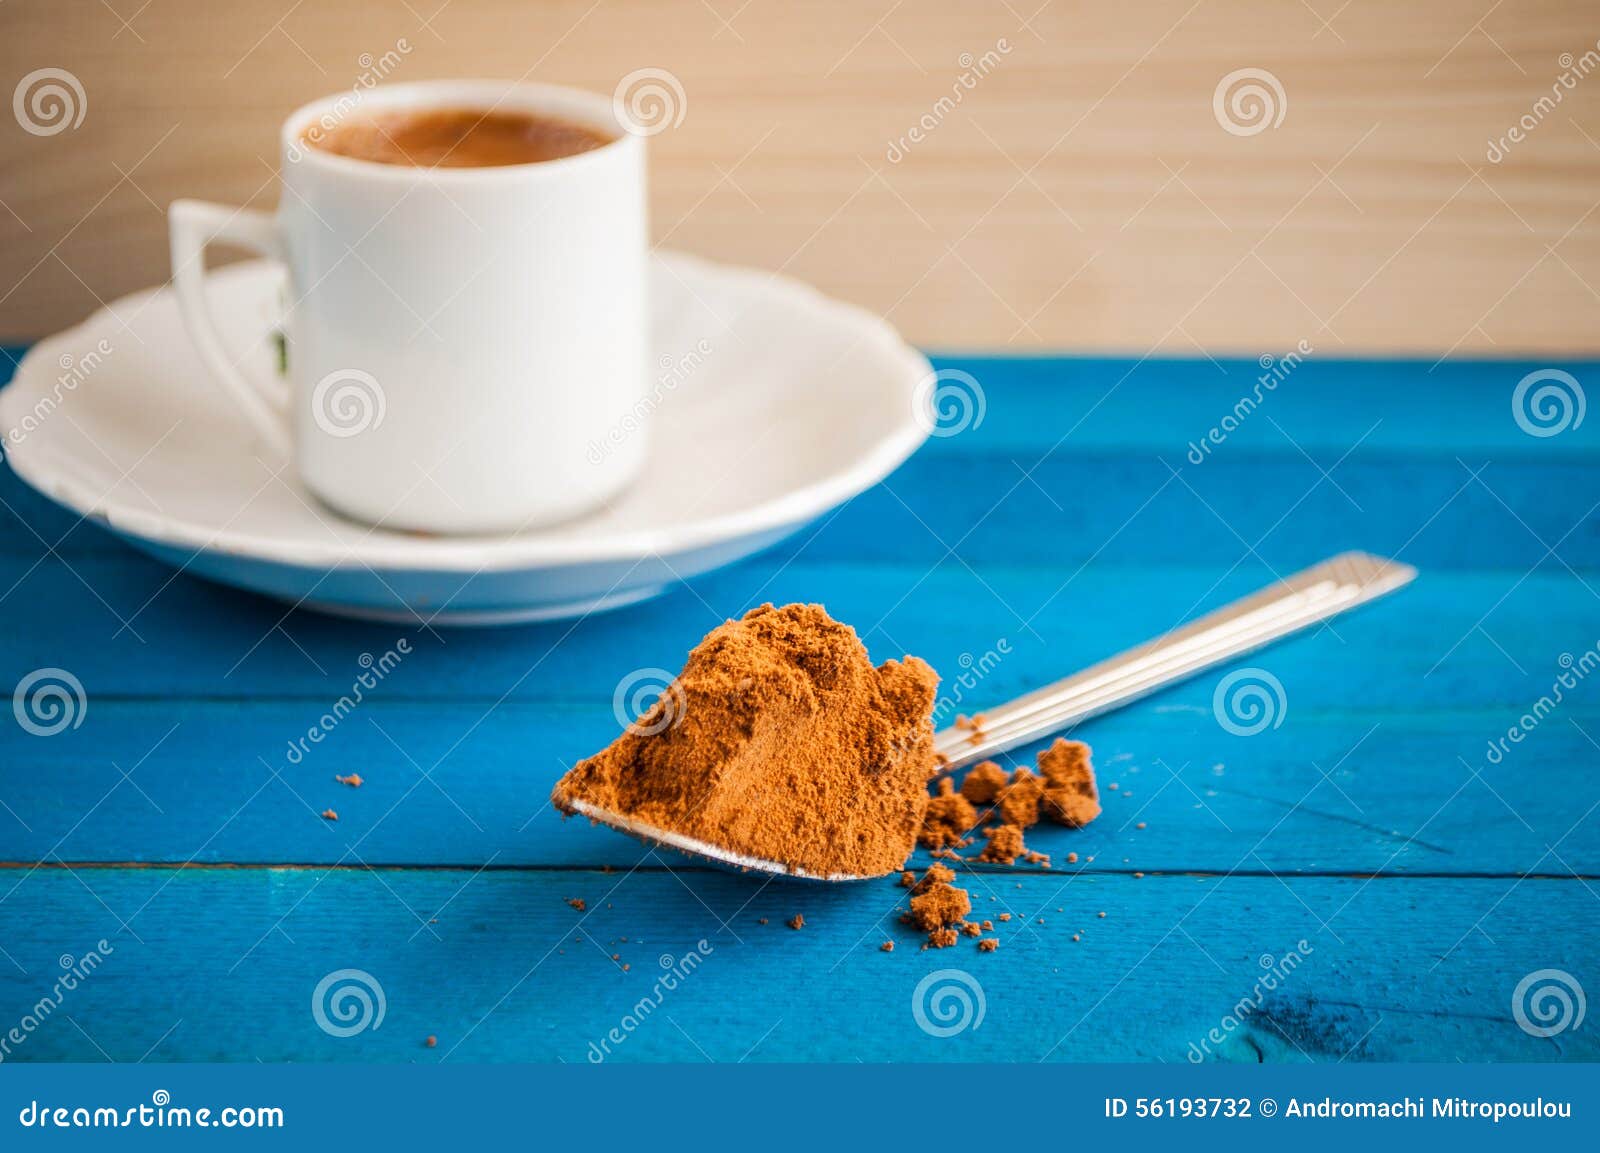 greek coffee on a blue table